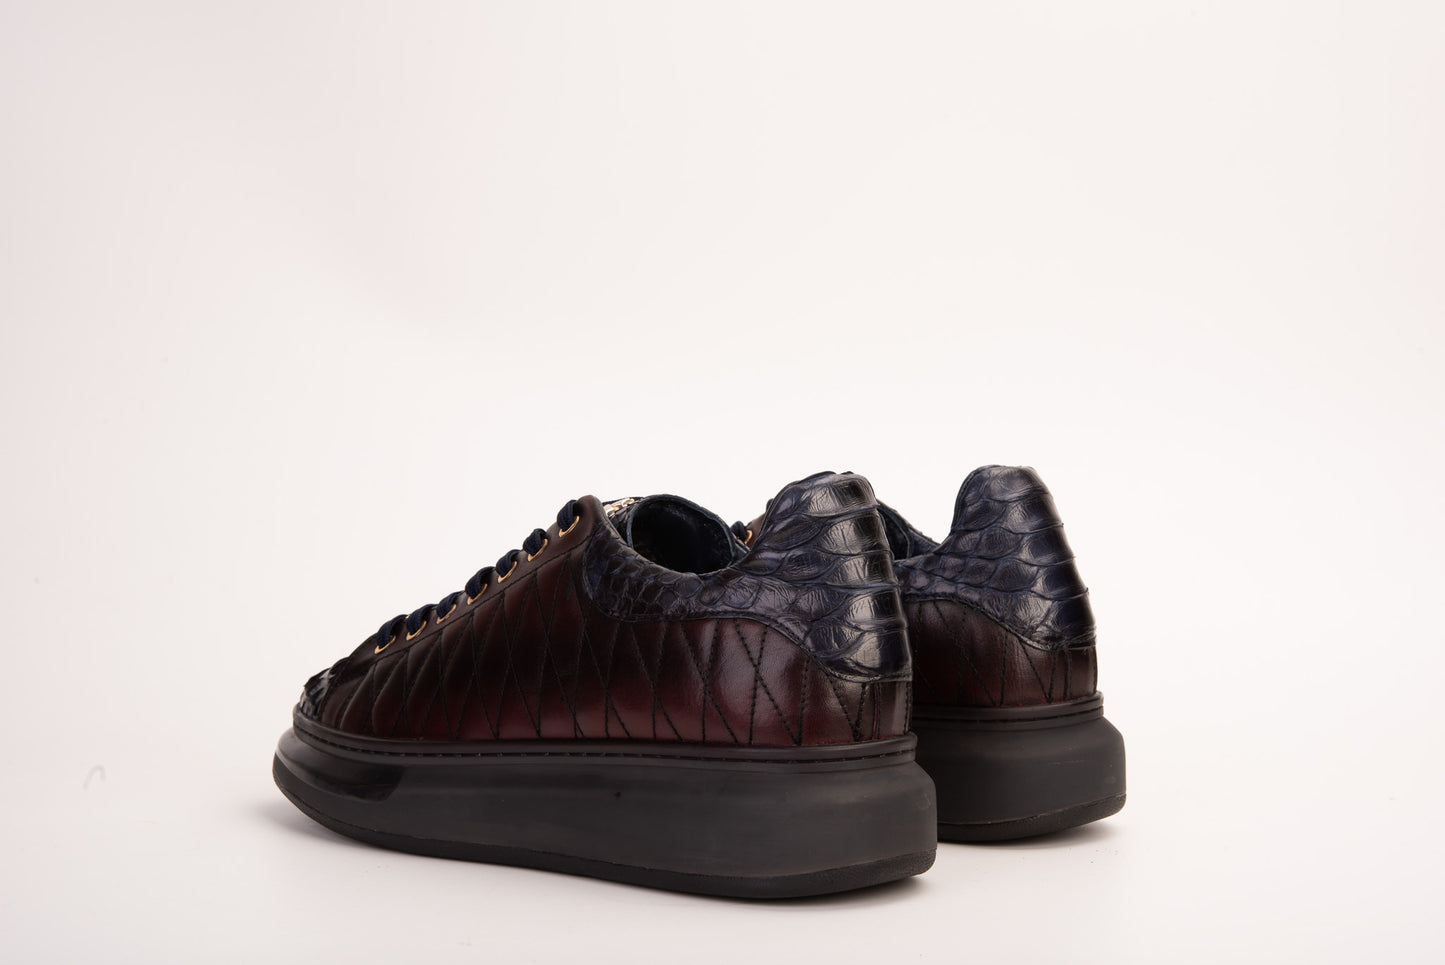 The Adler Navy Blue & Burgundy Snk Leather Men Sneaker Limited Edition